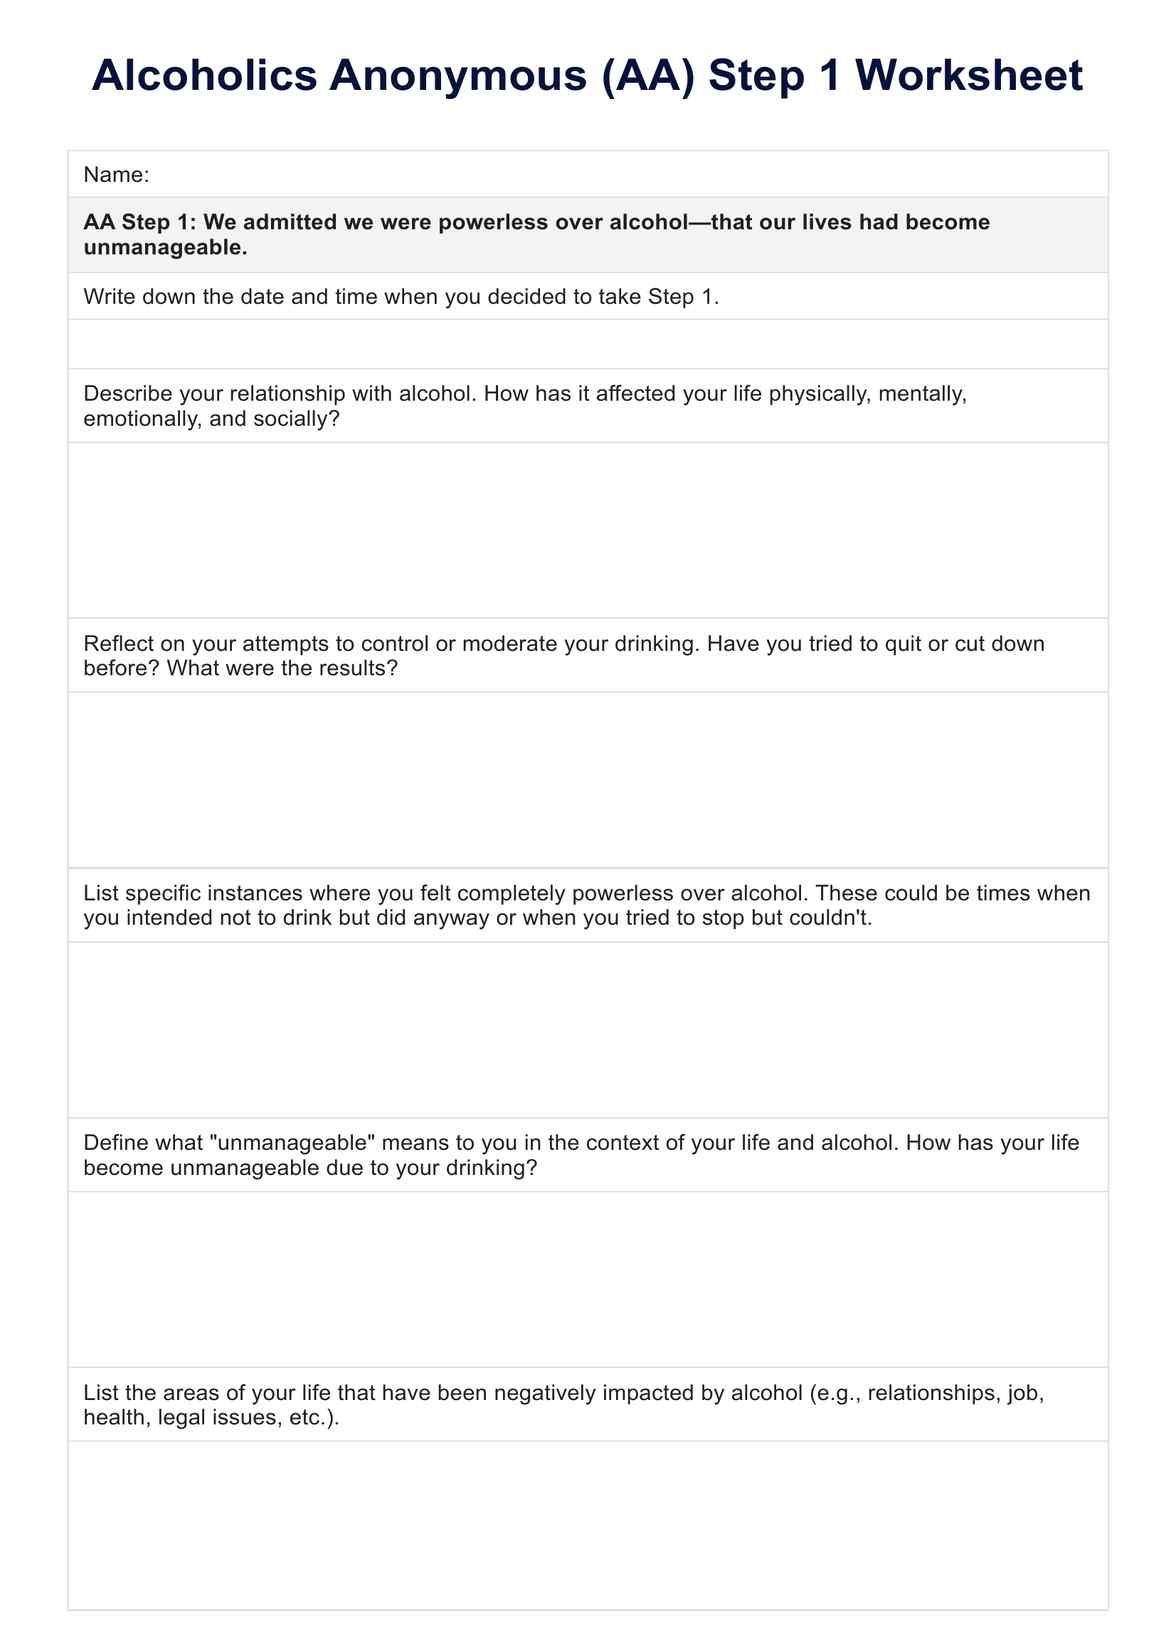 AA Step 1 Worksheets PDF Example